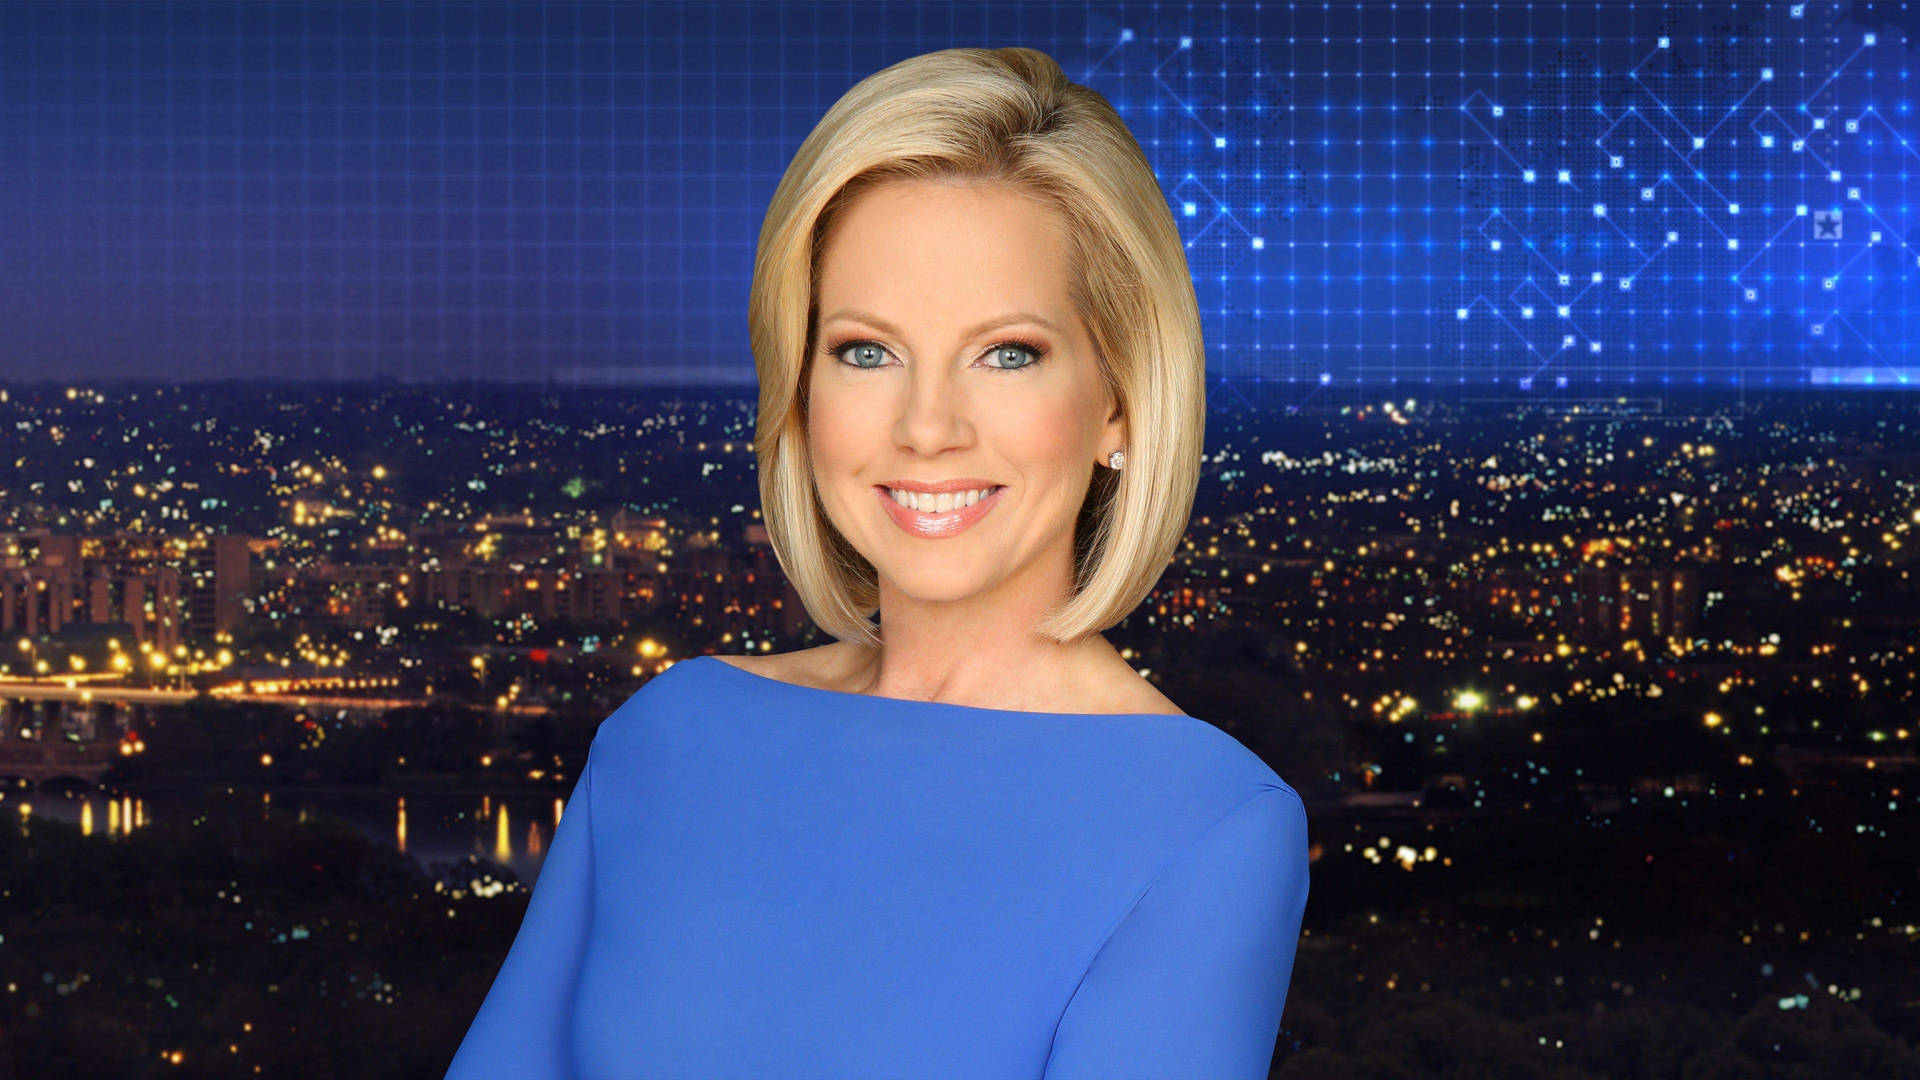 Fox News Shannon Bream Background